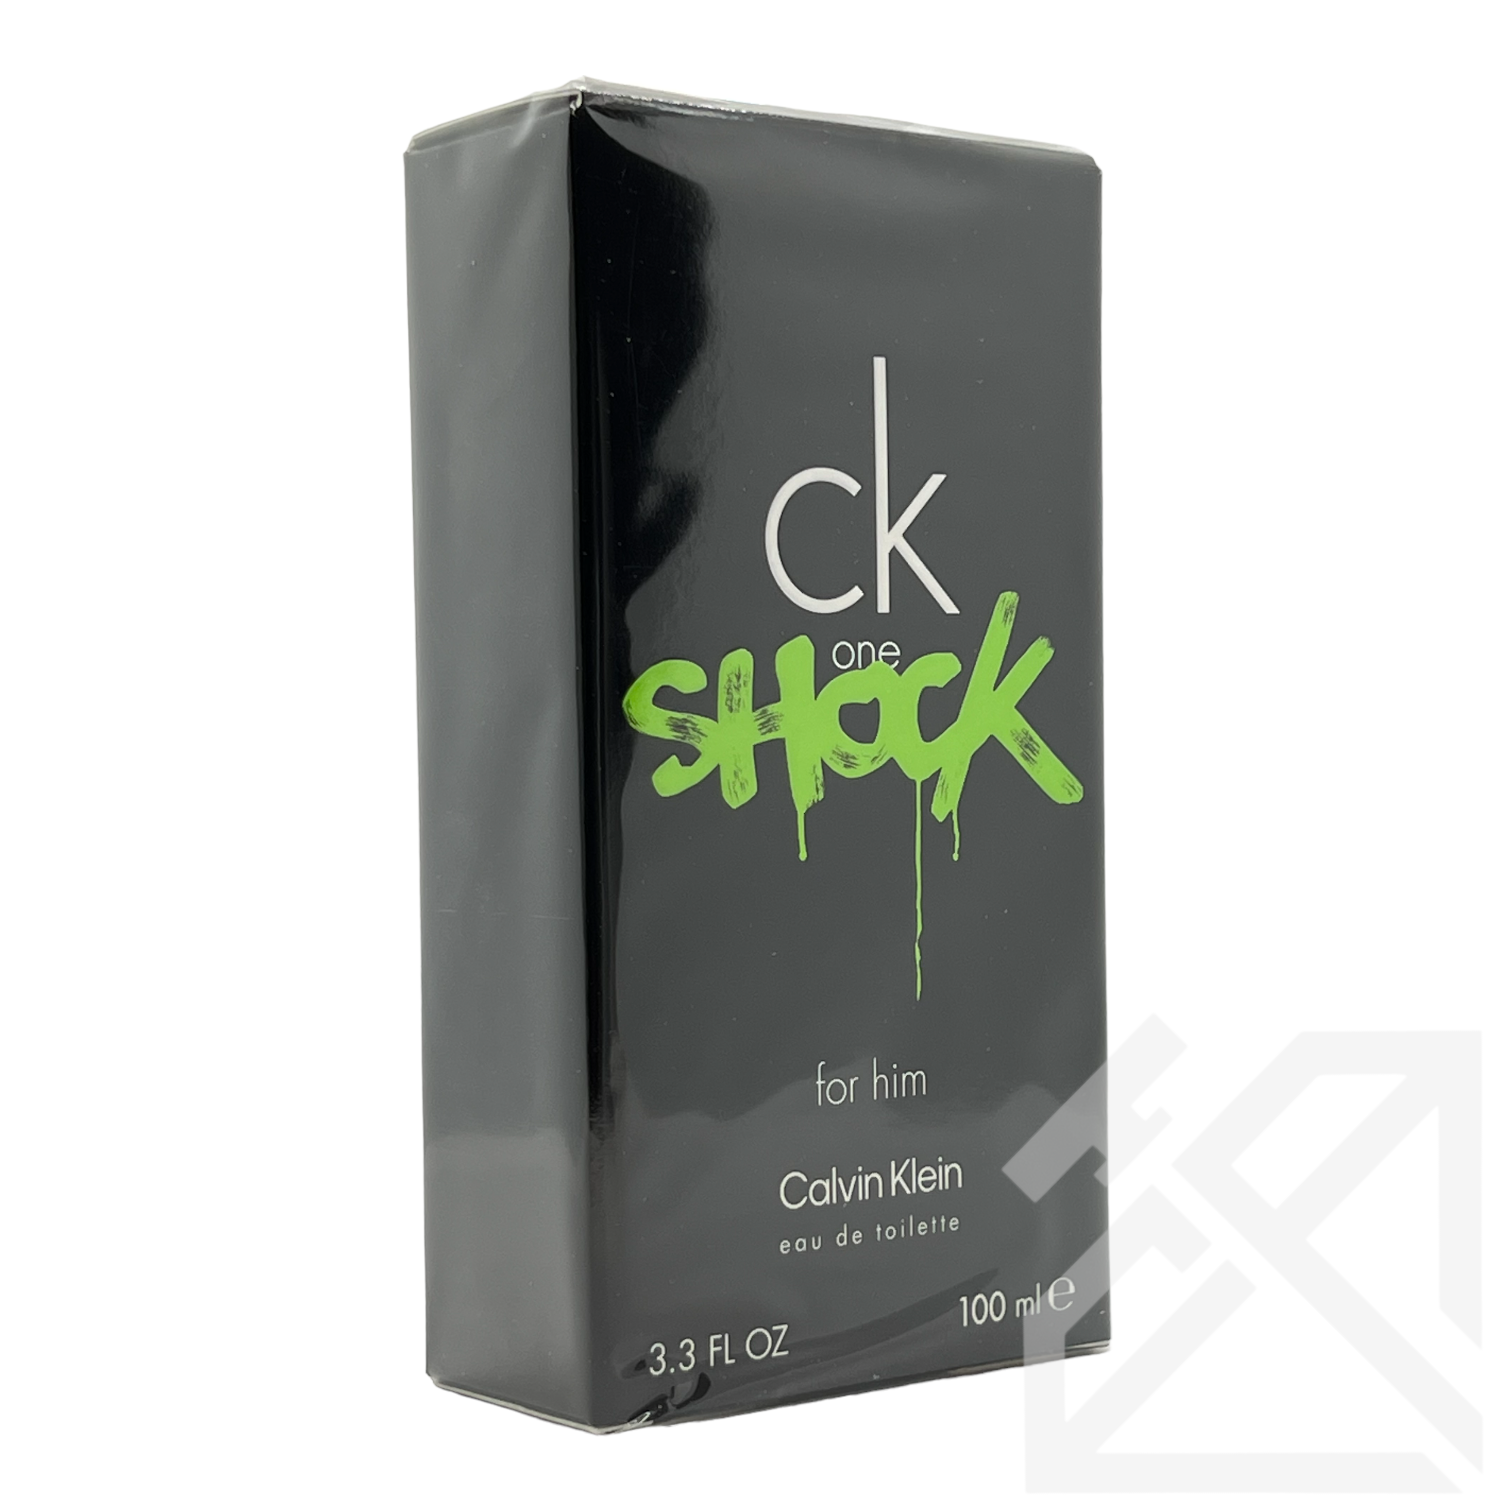 Calvin Klein CK ONE SHOCK For Him Eau de Toilette 100ml spray – Fragrance  Addict